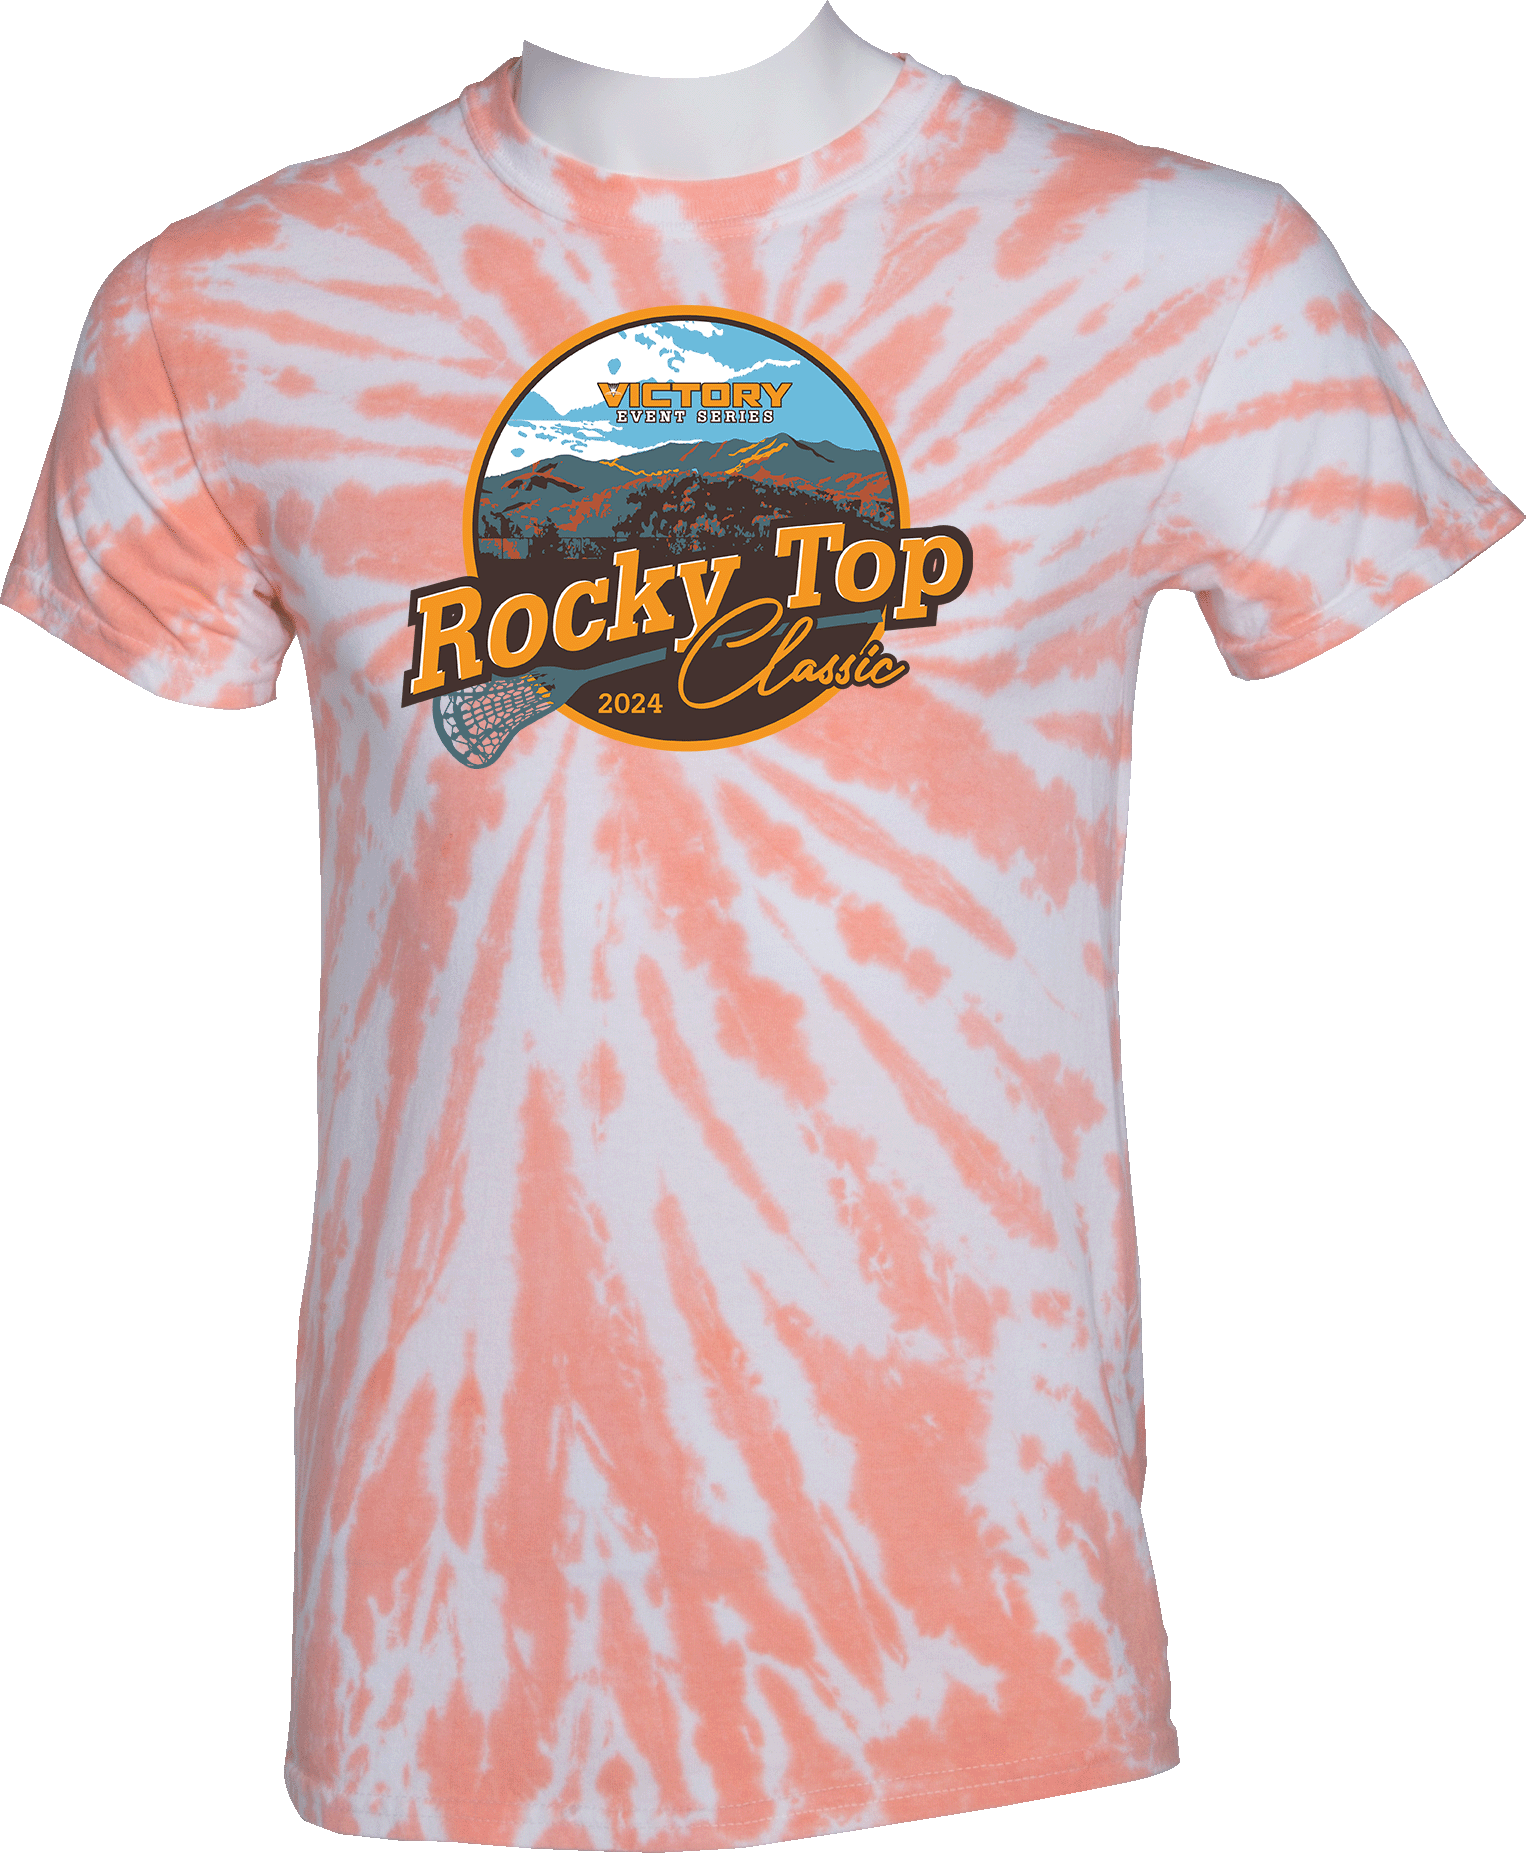 Tie-Dye Short Sleeves - 2024 Rocky Top Classic